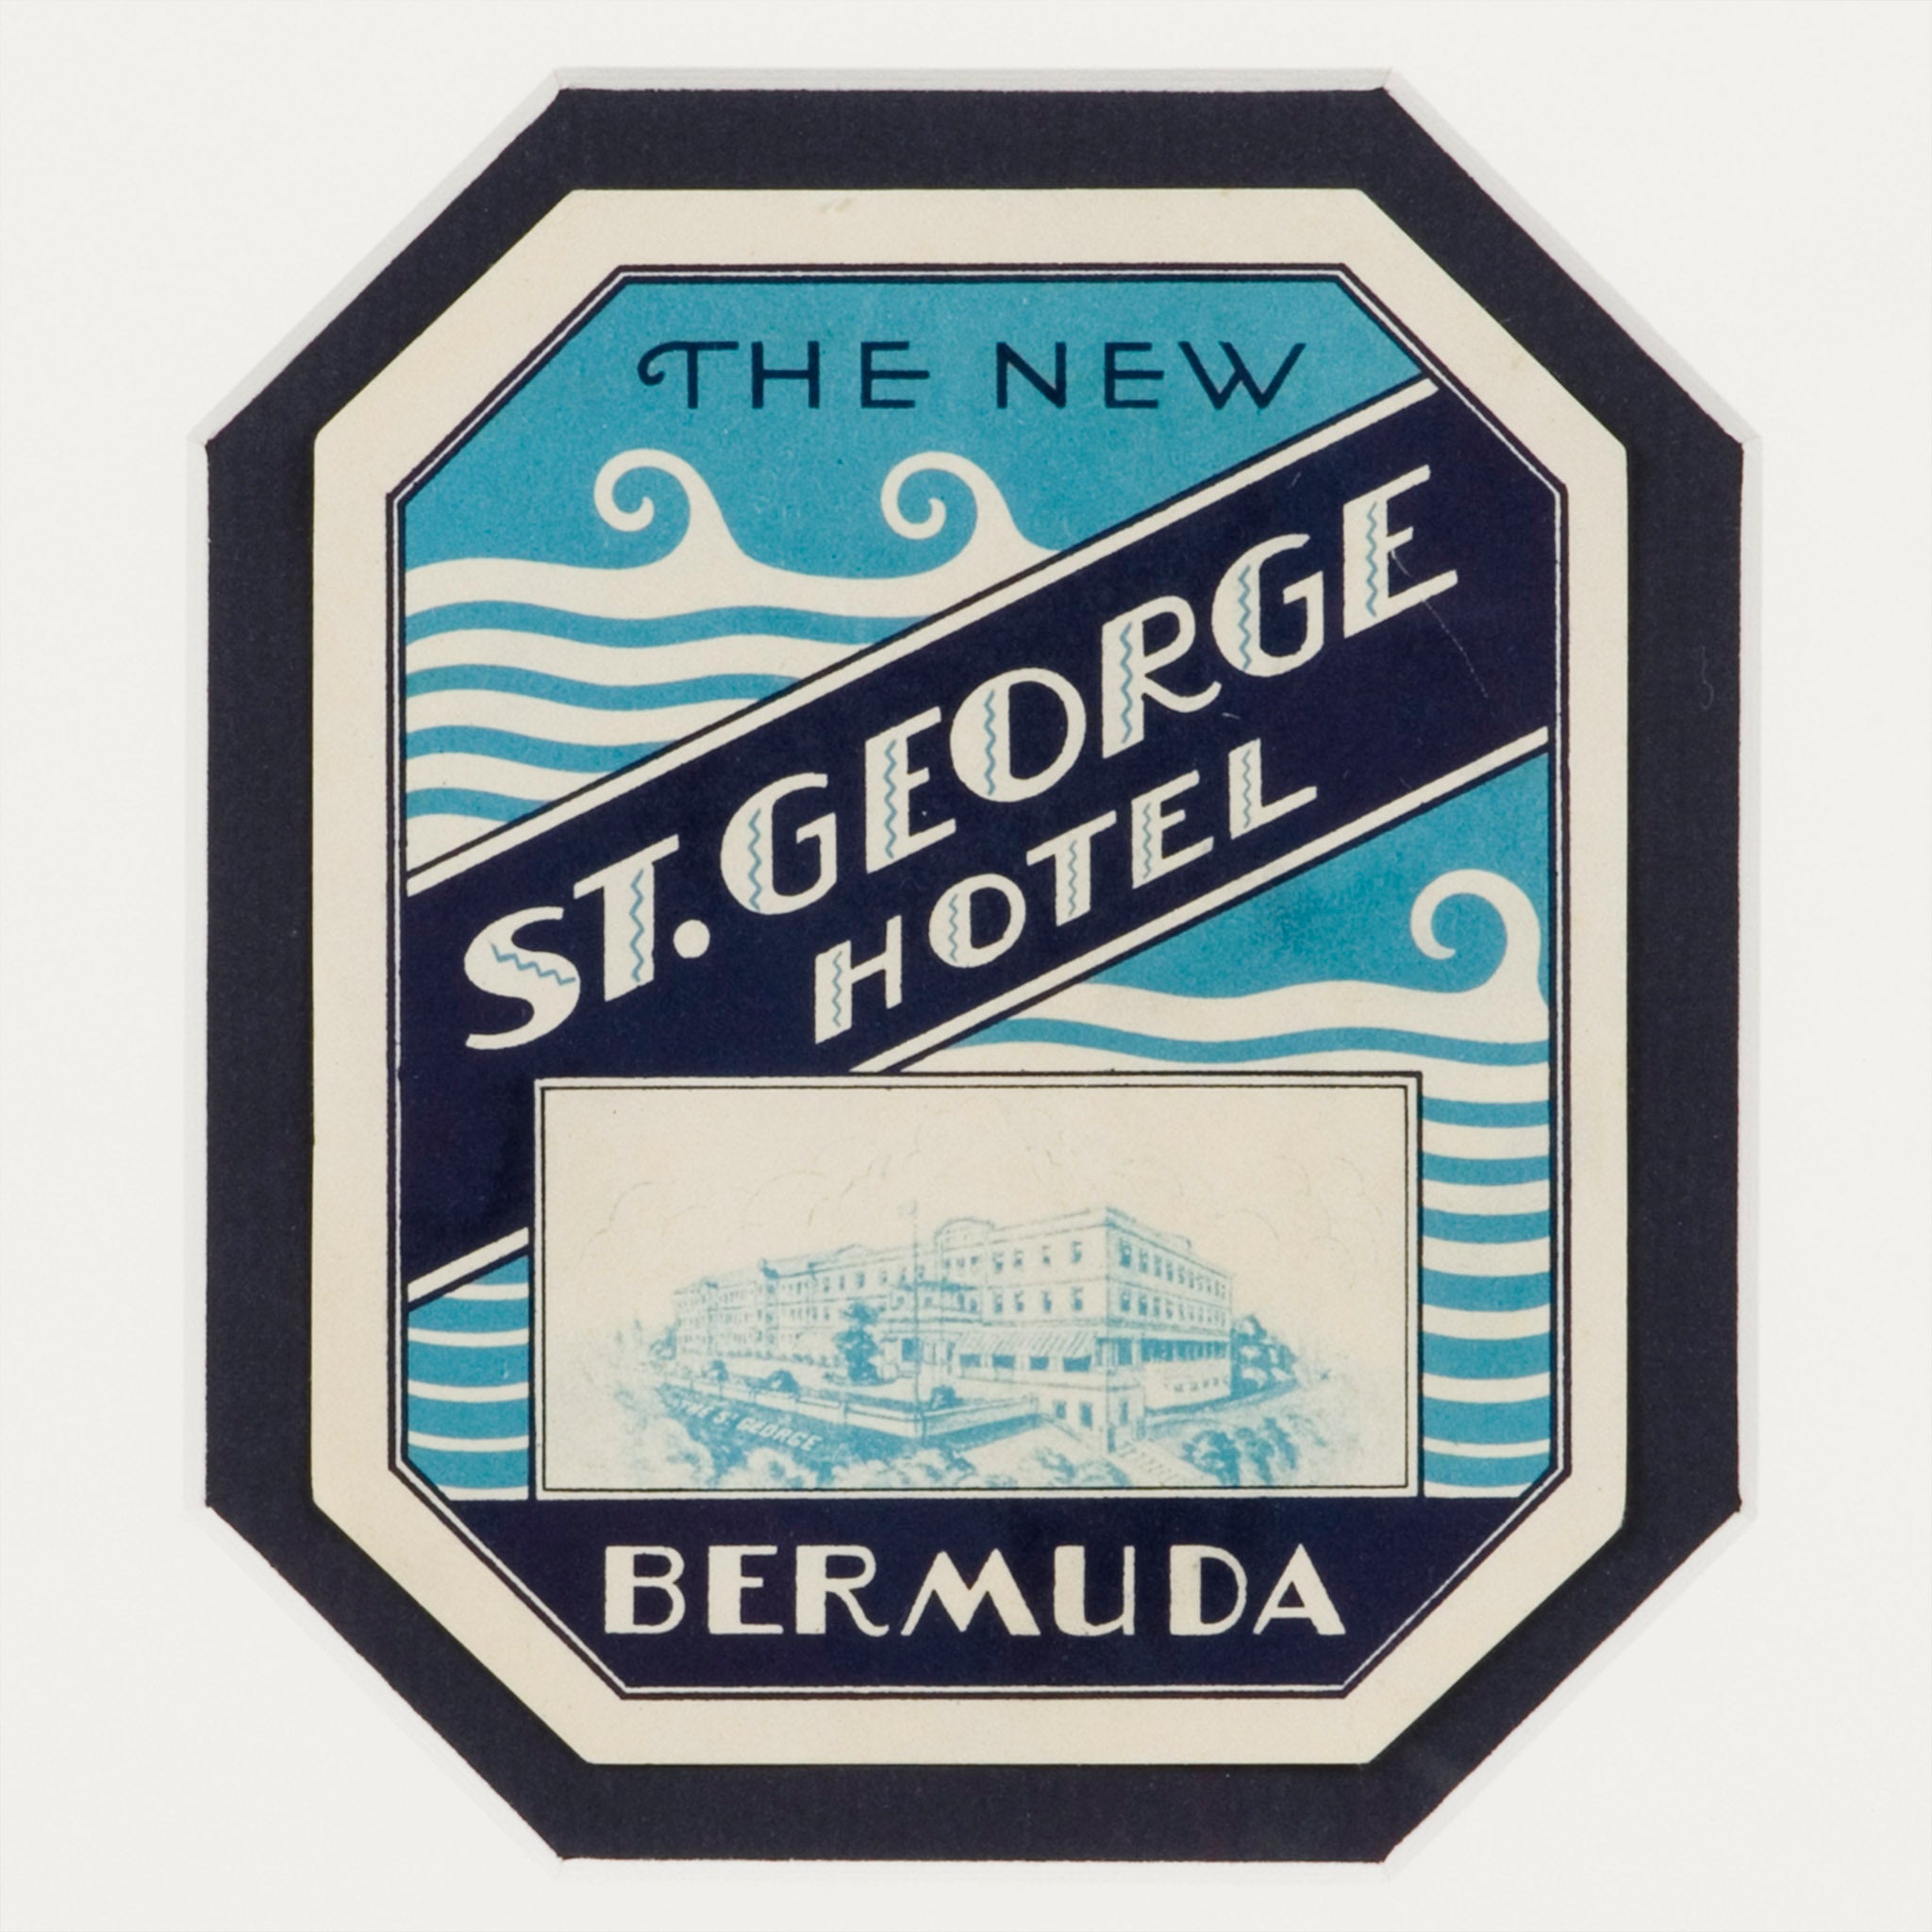 St. George Hotel Bermuda Luggage Label